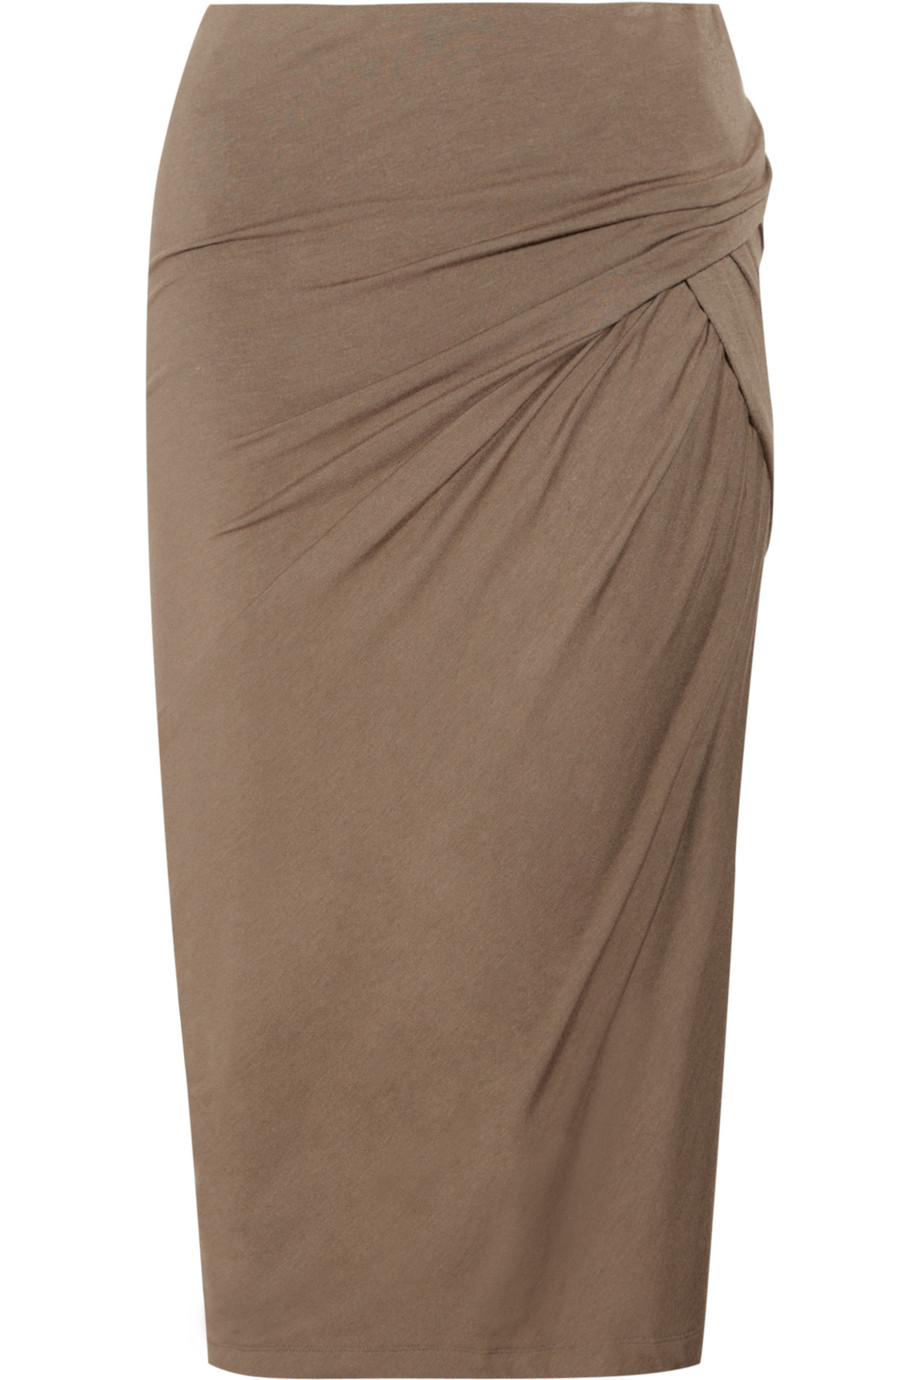 Donna karan Stretch-jersey Pencil Skirt in Brown | Lyst